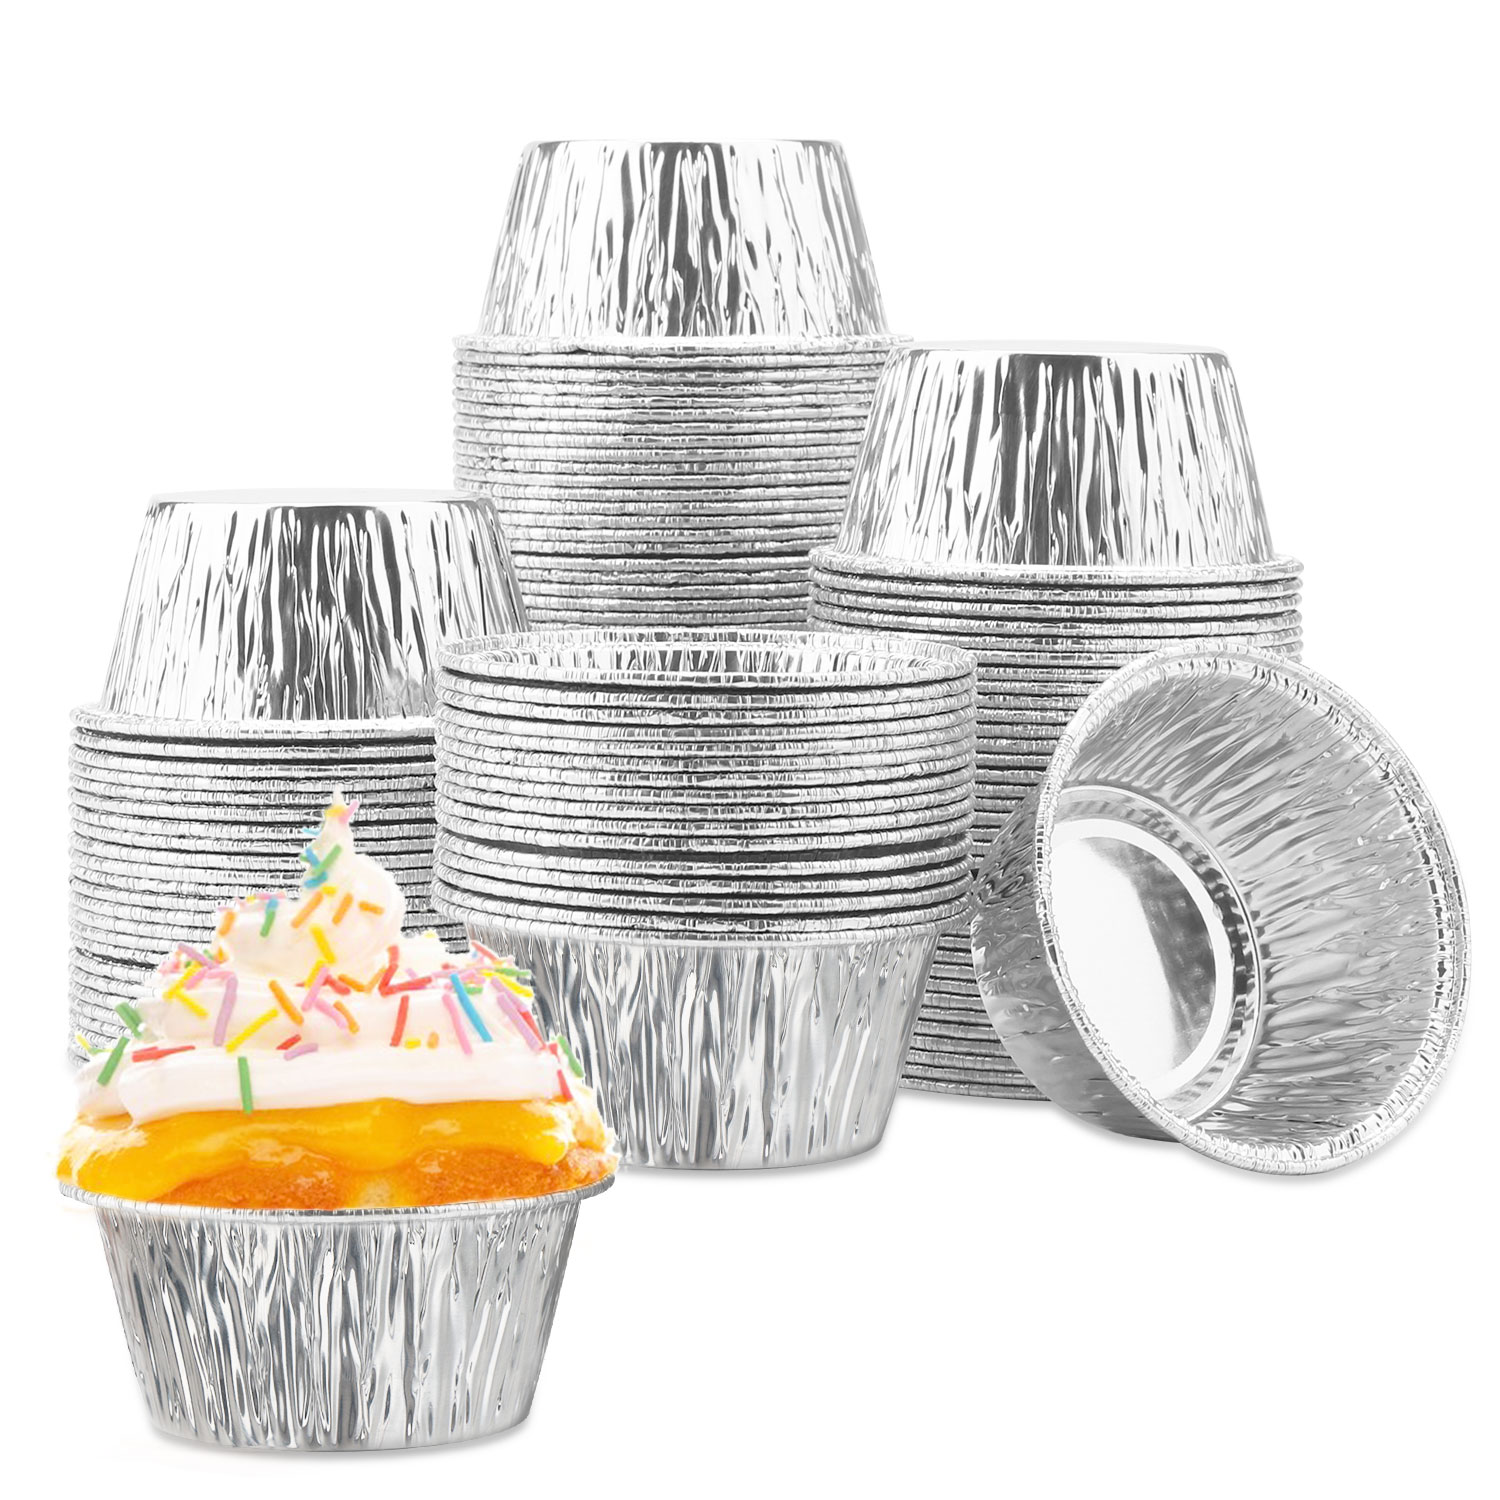 Disposable Foil Ramekins Eusoar 5oz 125ml Muffin Liners Cups with Lids 100pcs Cupcake Baking Cups Aluminum Foil Baking Cups Cupcake Liners Creme Brulee Ramekins Aluminum Foil Cupcake Holder Pan